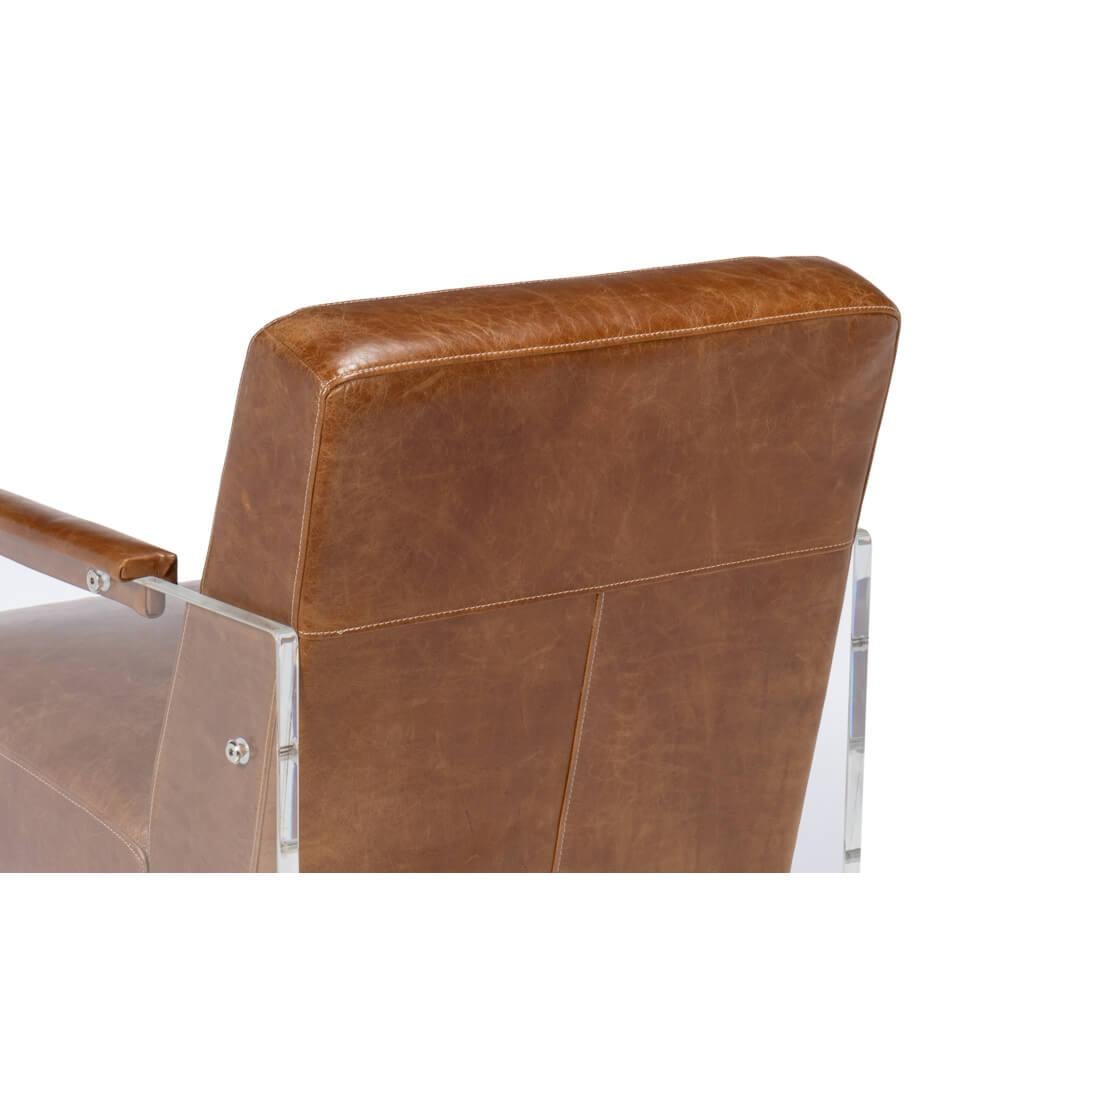 Moderner Sessel aus braunem Leder und Lucite (Acryl) im Angebot